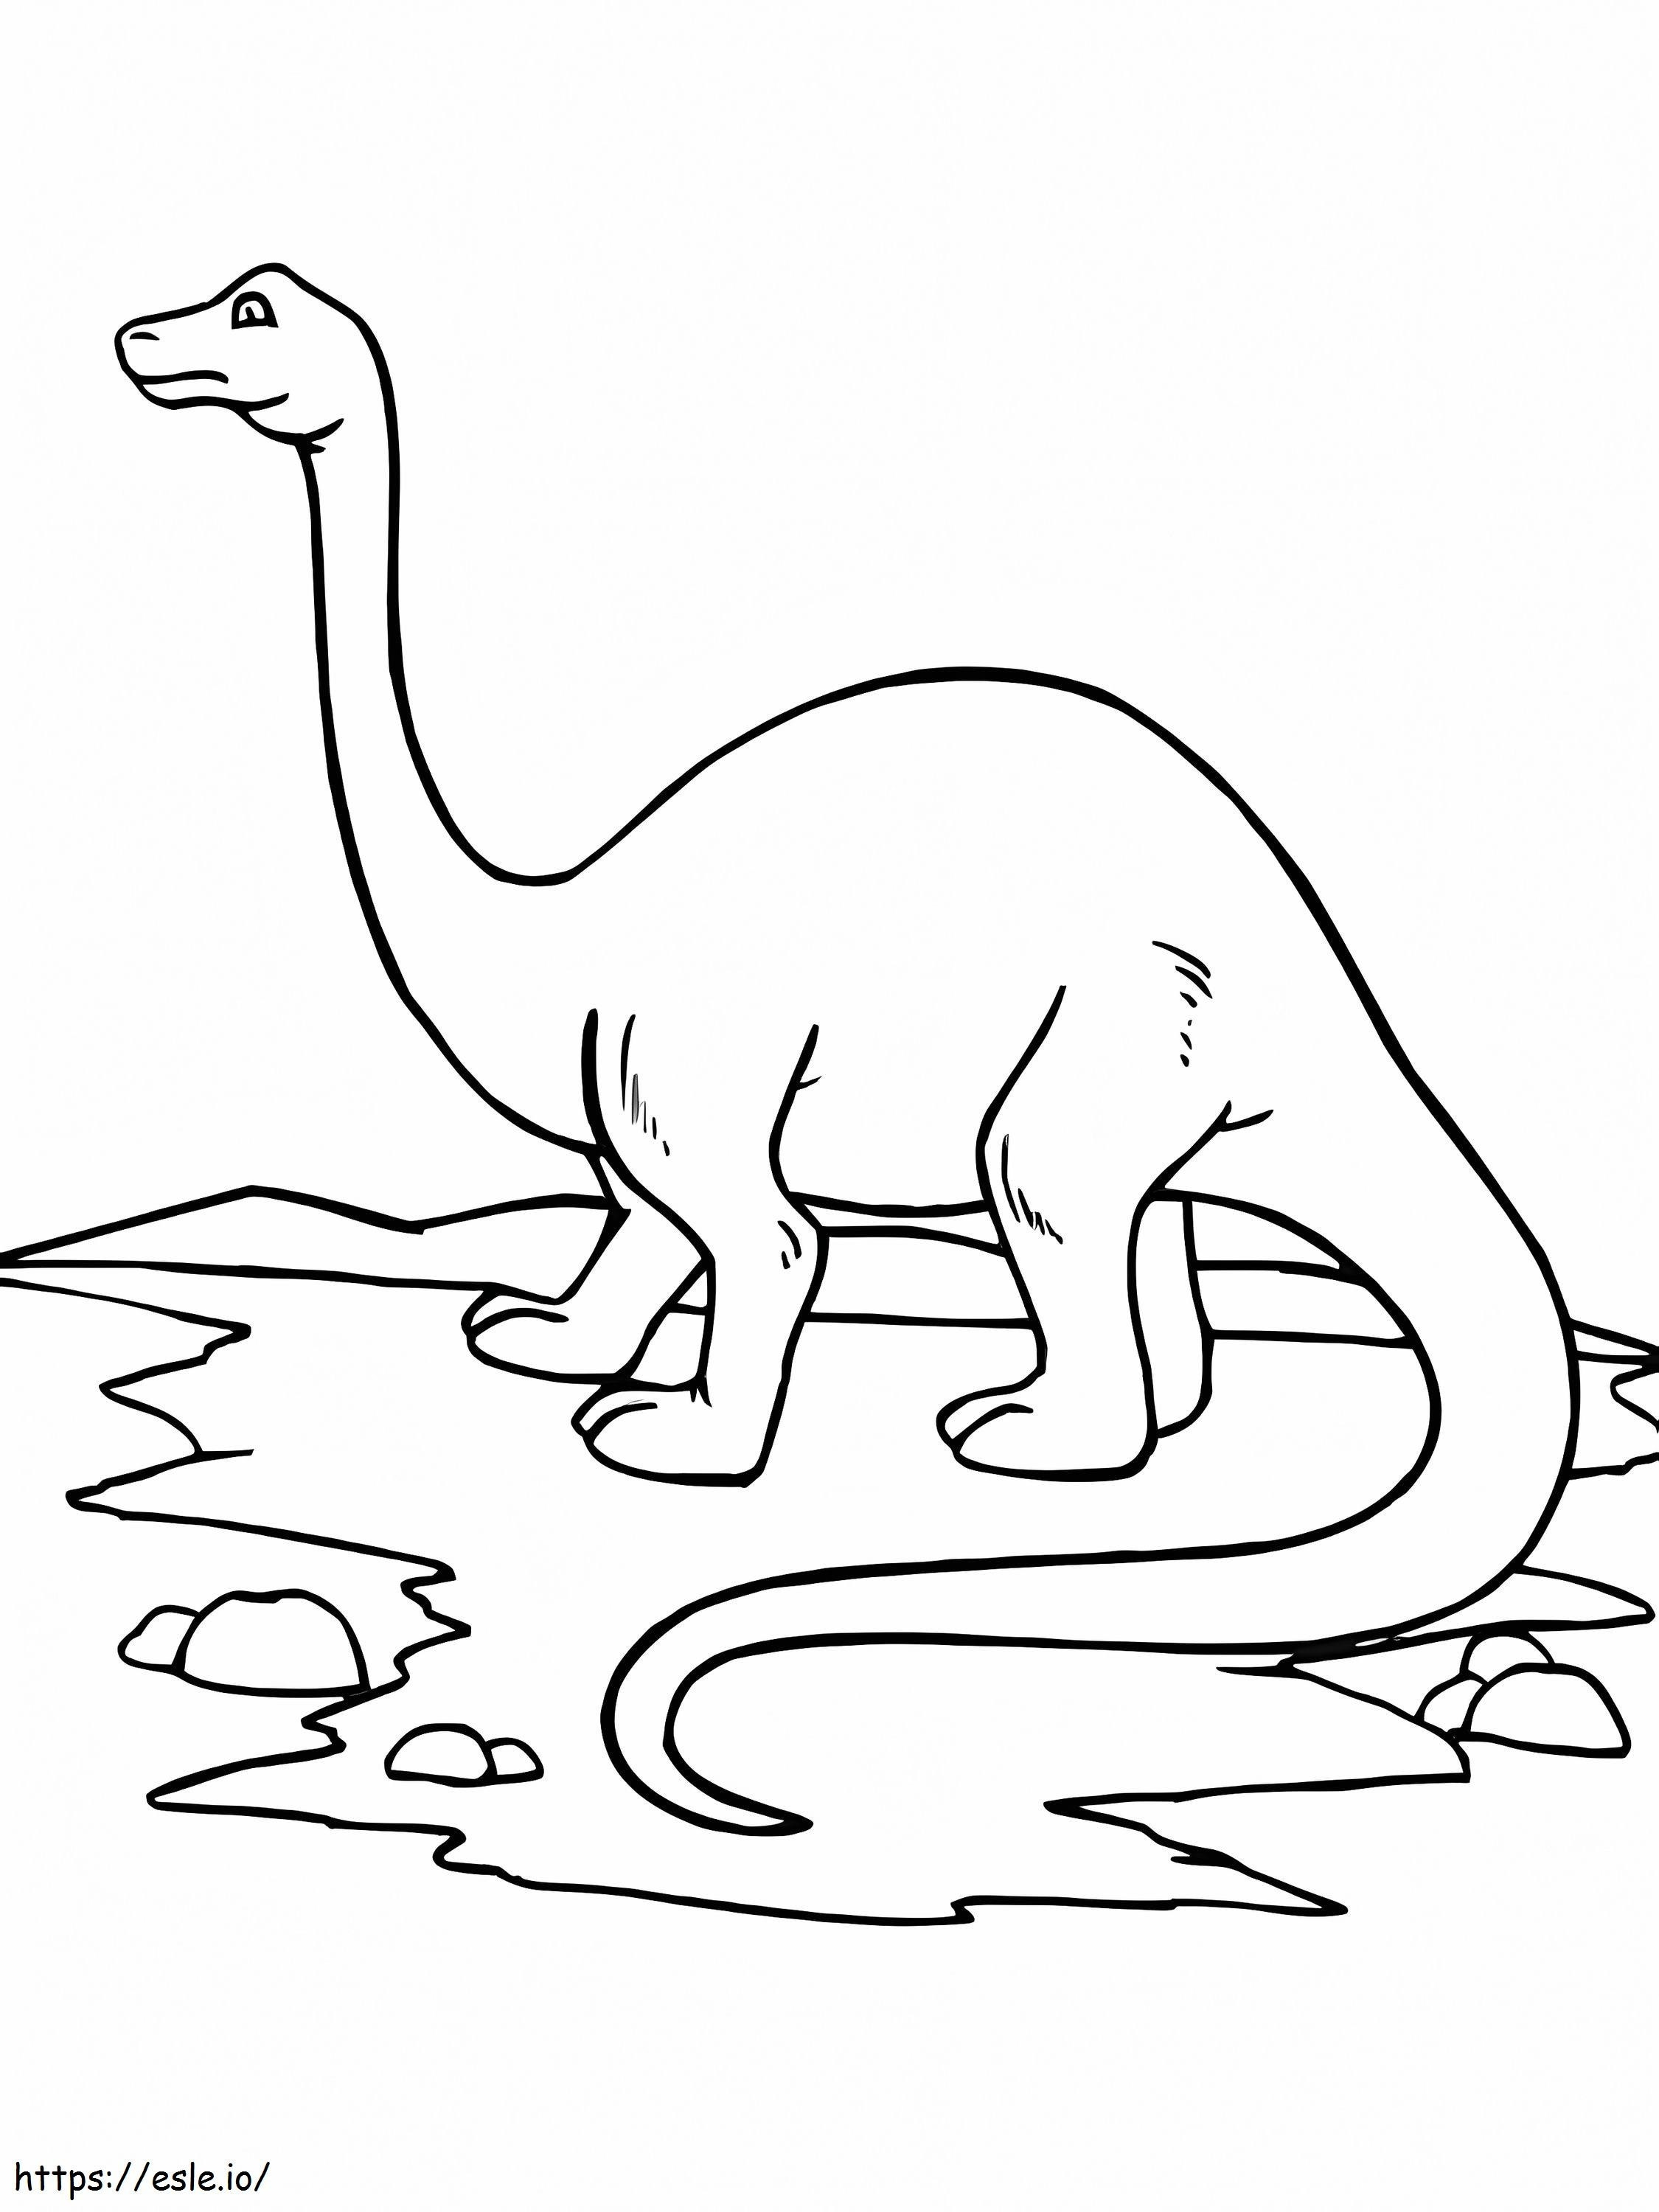 Brontosaurus 2 ausmalbilder